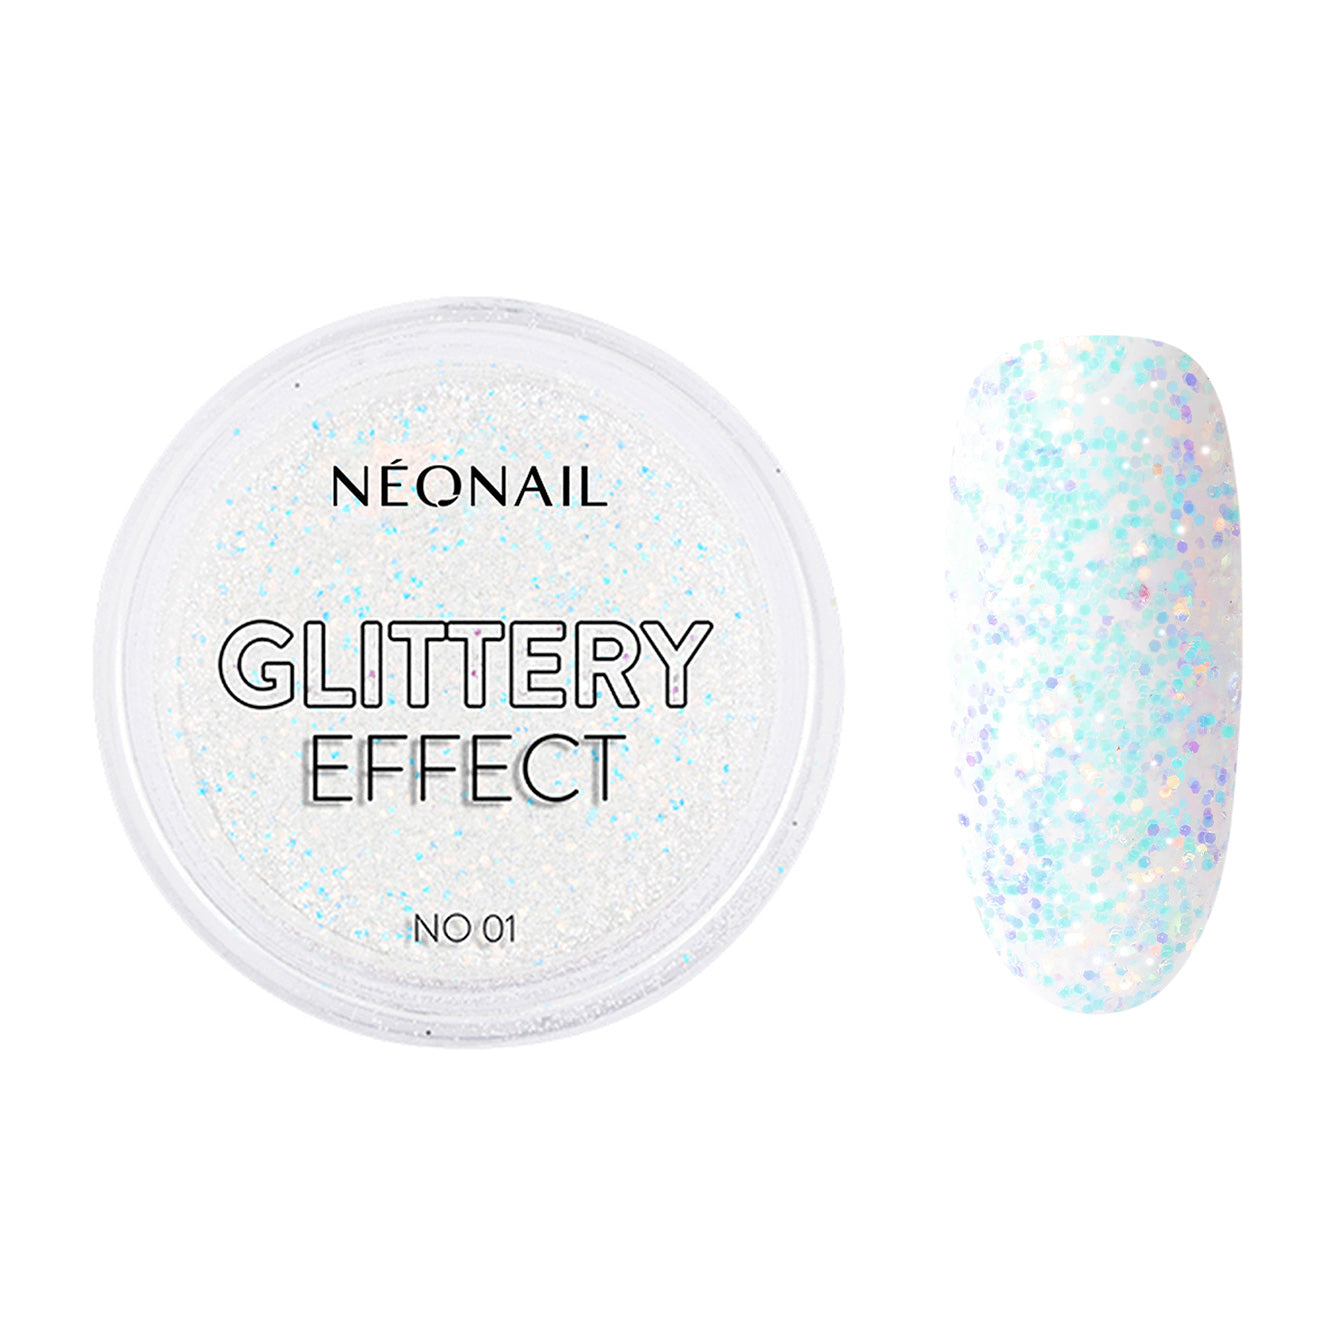 Neglepynt - Glittery Effect No 01 - 2g-Neglepynt-NeoNail-NR Kosmetik